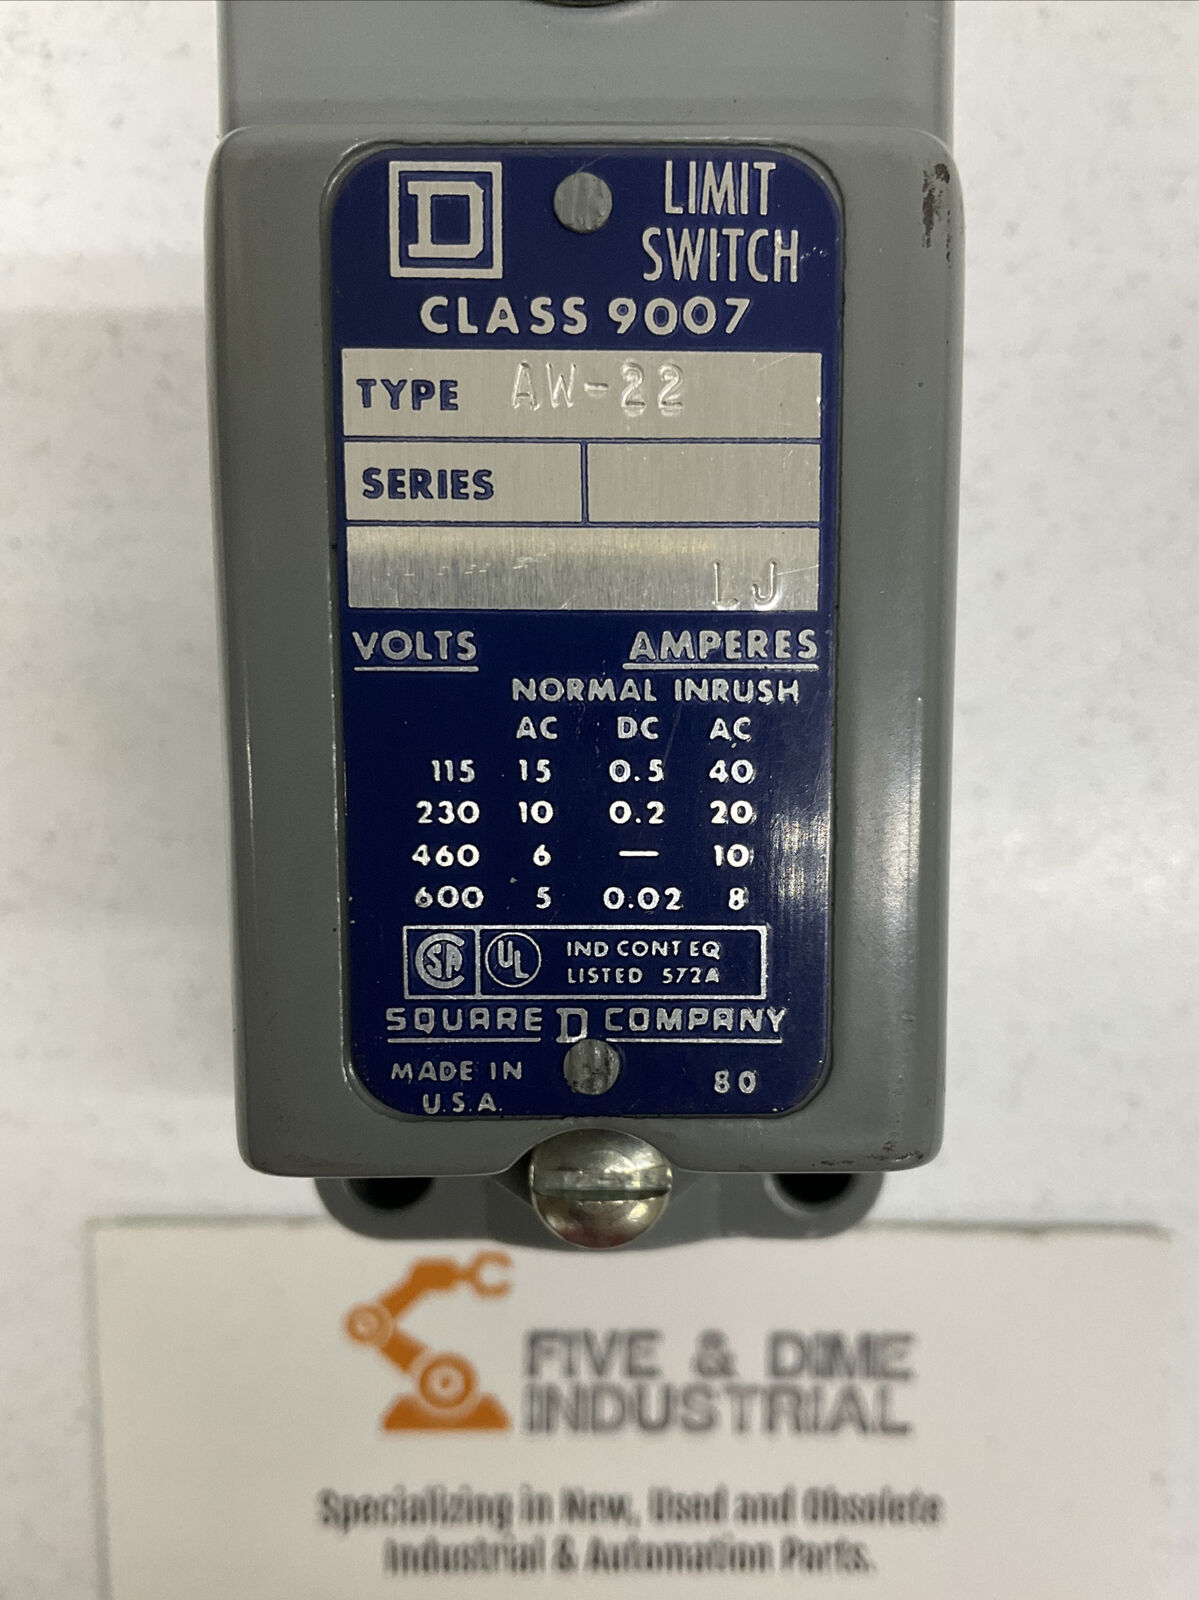 Square D 9007 AW-22 Precision Limit Switch 1 NO, 1 NC 600V  (BL204) - 0